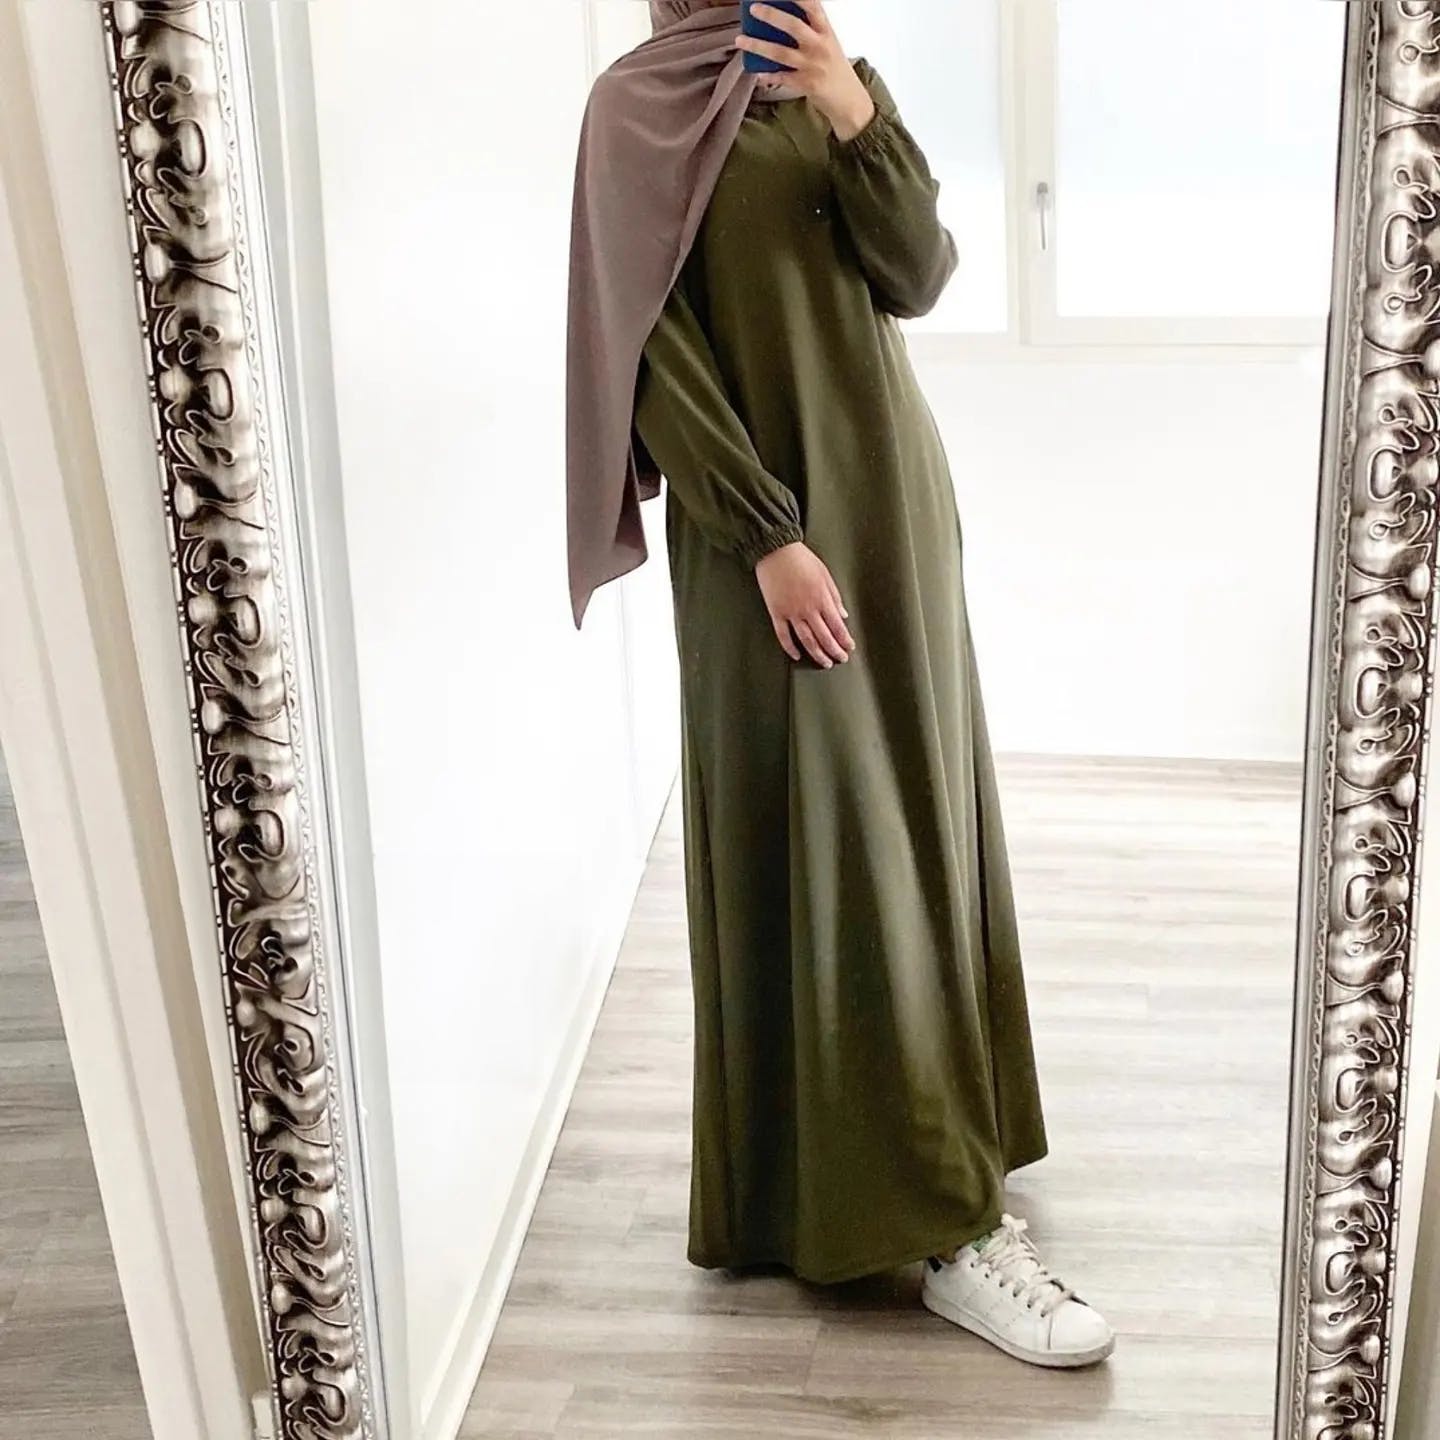 Olive Lastic Sleeve Abaya